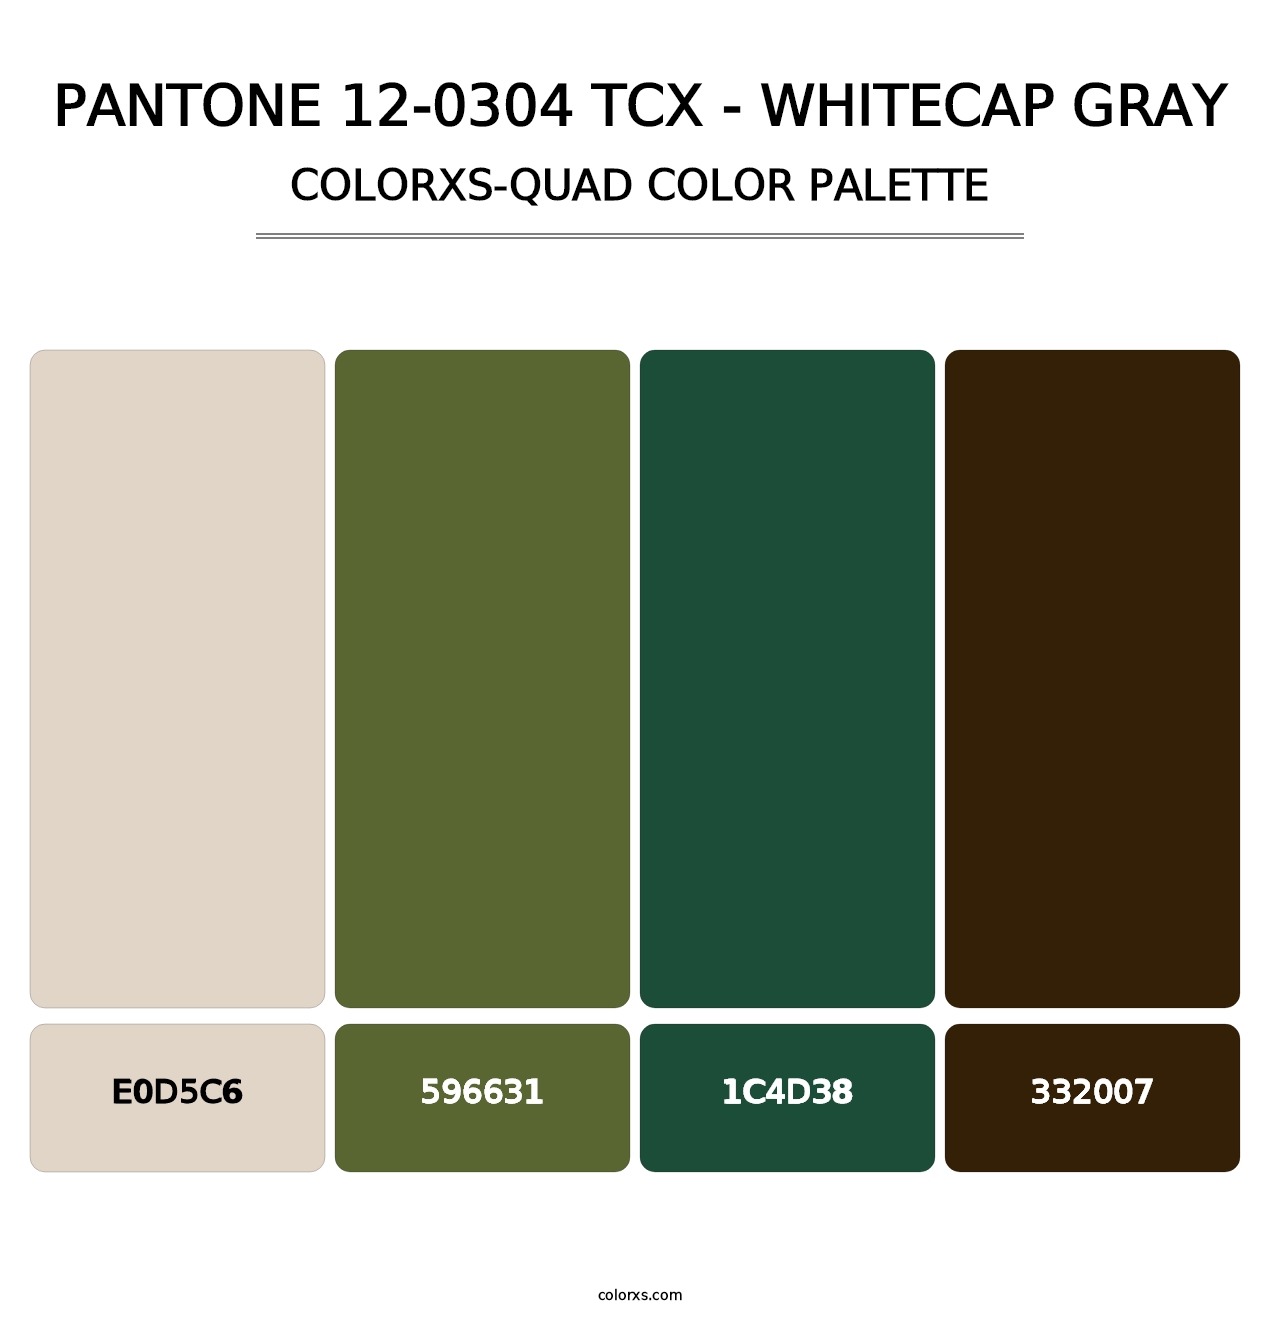 PANTONE 12-0304 TCX - Whitecap Gray - Colorxs Quad Palette